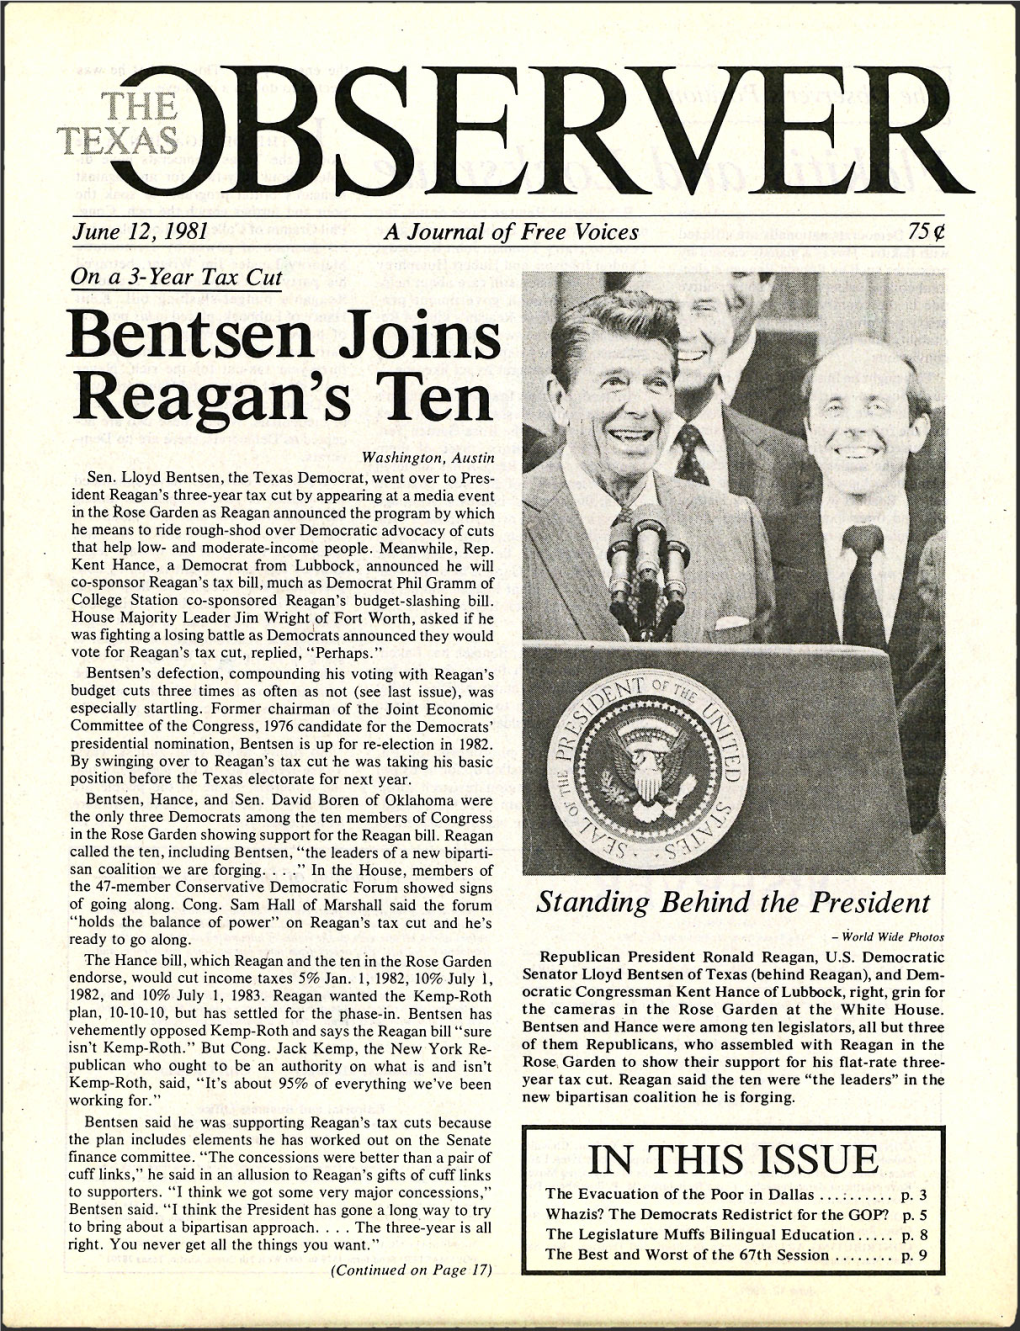 Bentsen Joins Reagan's Ten Washington, Austin Sen